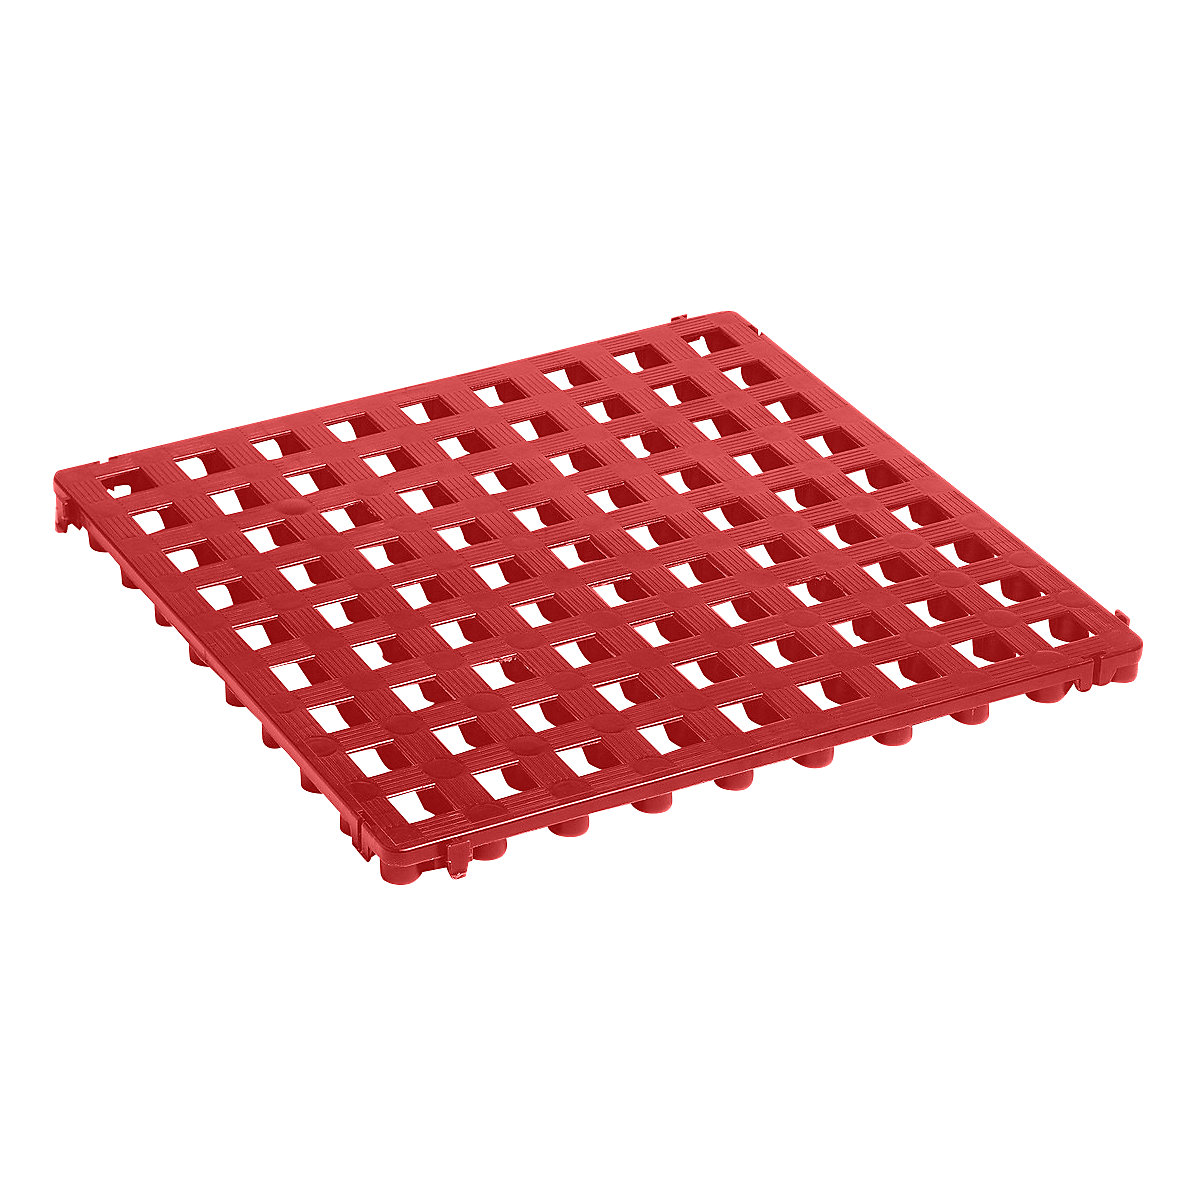 Plastic floor tile, polyethylene